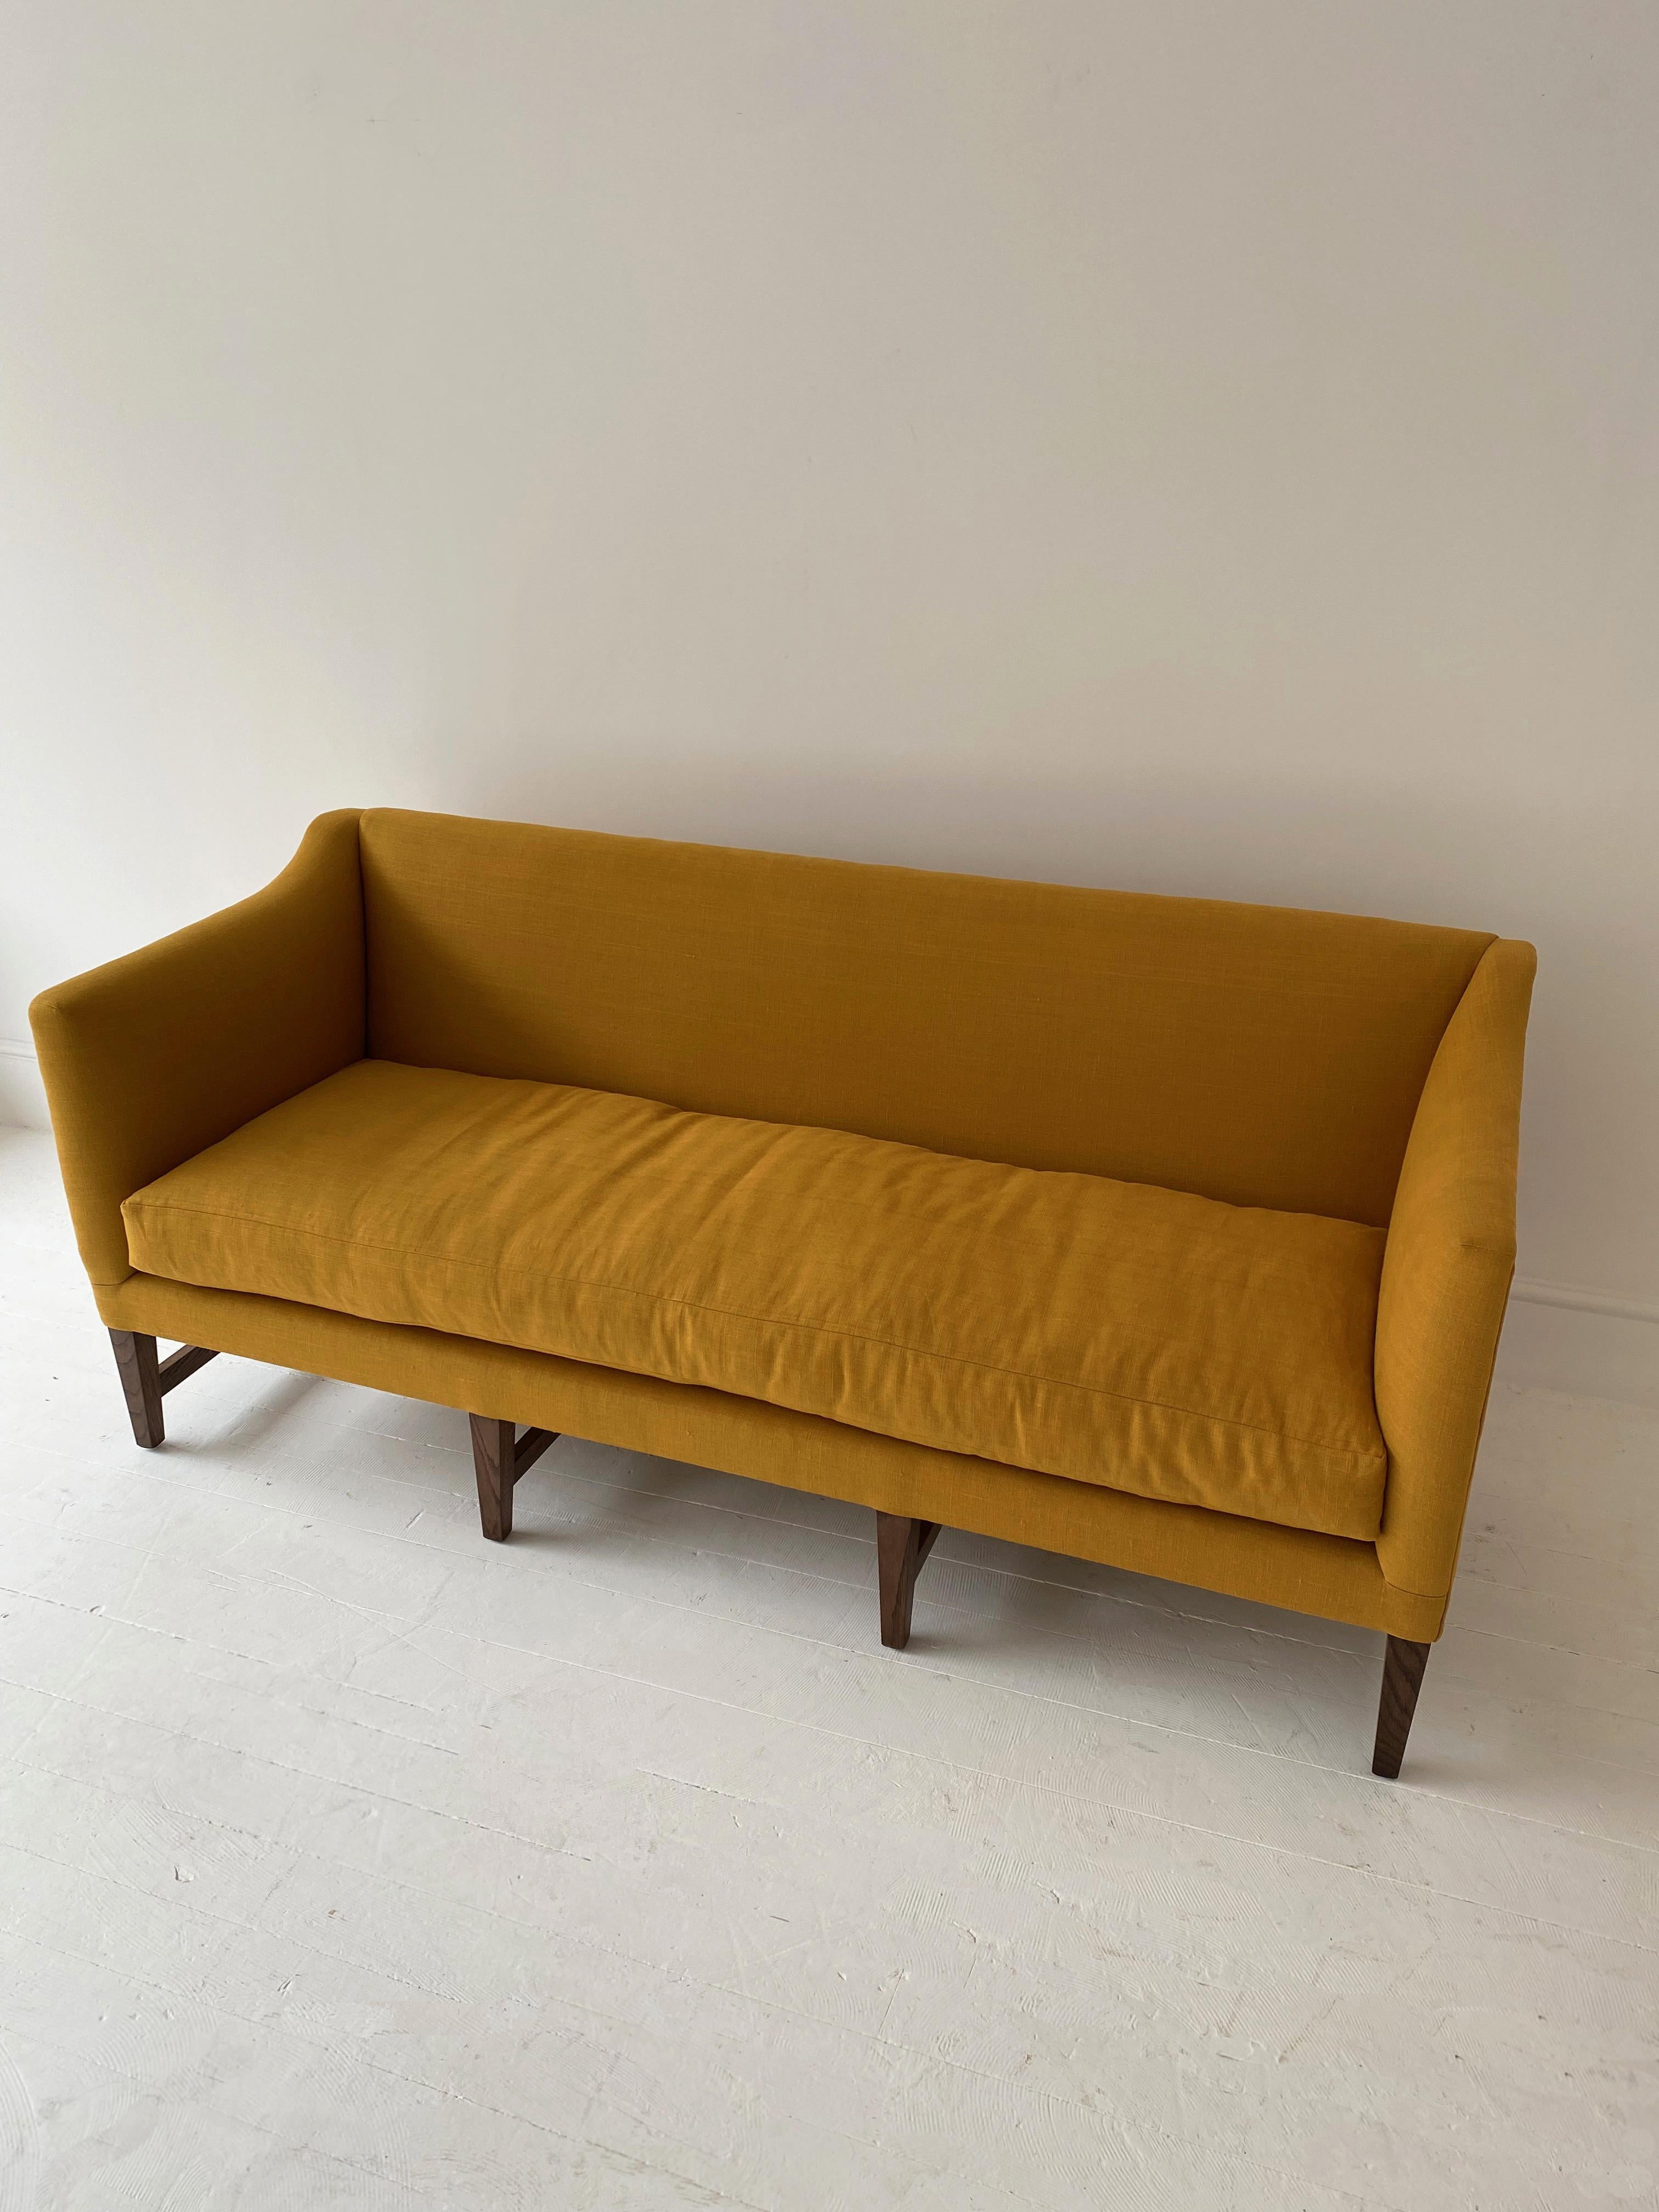 ‘The Ross’ Bespoke Regency Sofa by Noble 'Showroom Model' 1